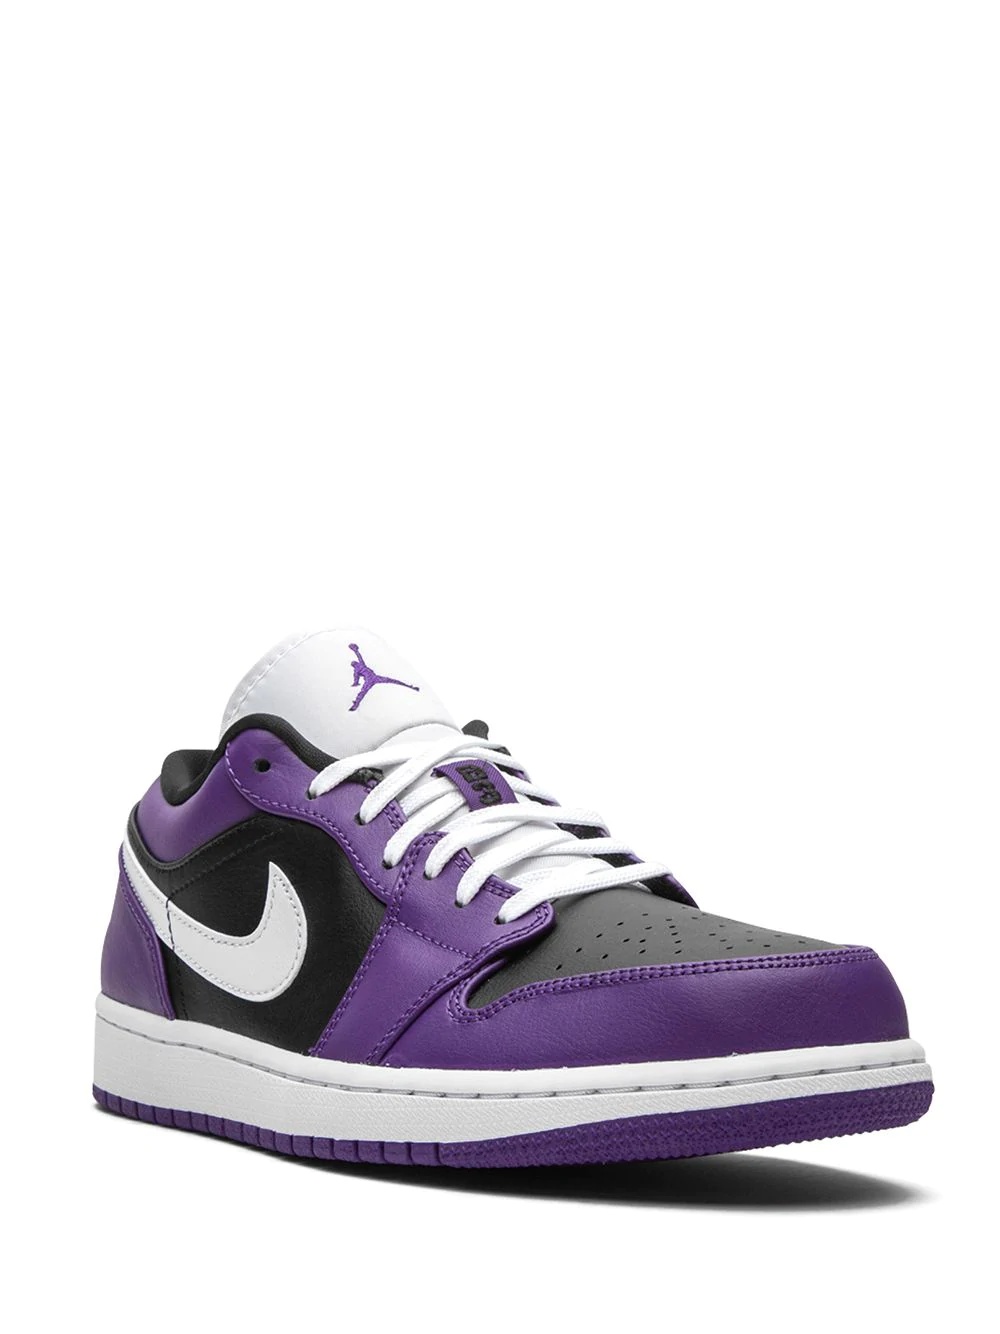 Air Jordan 1 Low "Court Purple" sneakers - 2